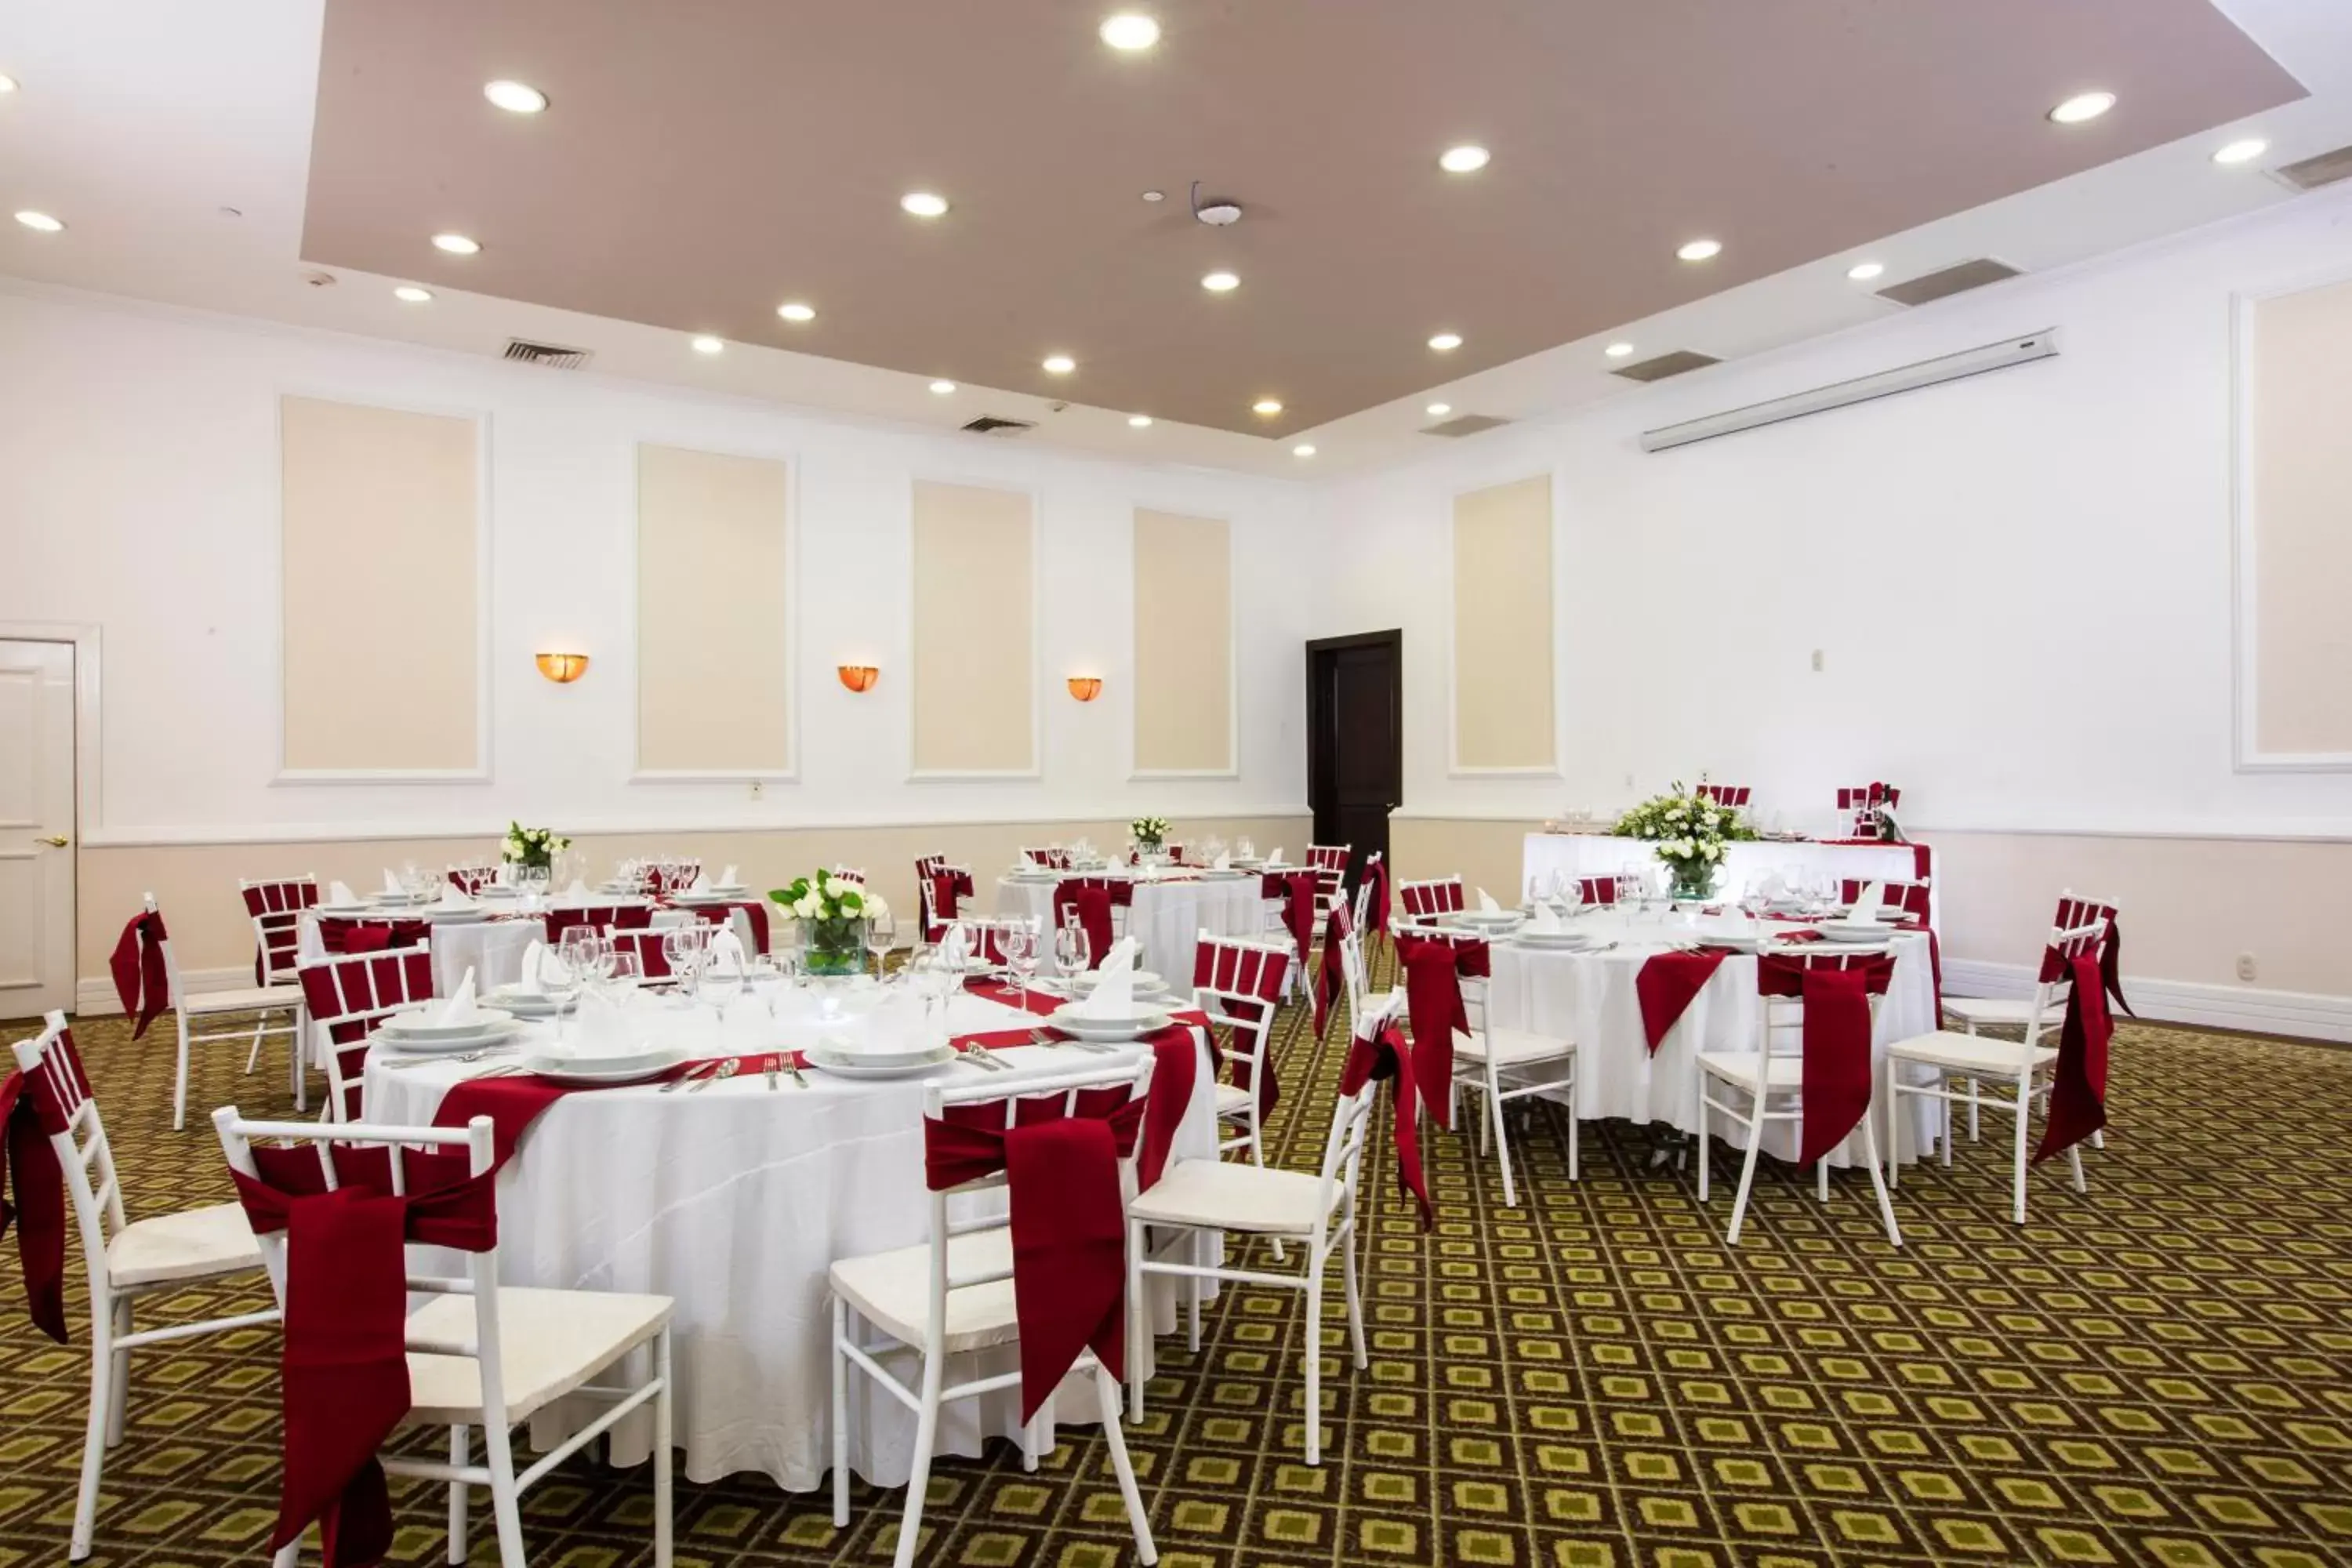 Meeting/conference room, Restaurant/Places to Eat in Krystal Satelite Maria Barbara